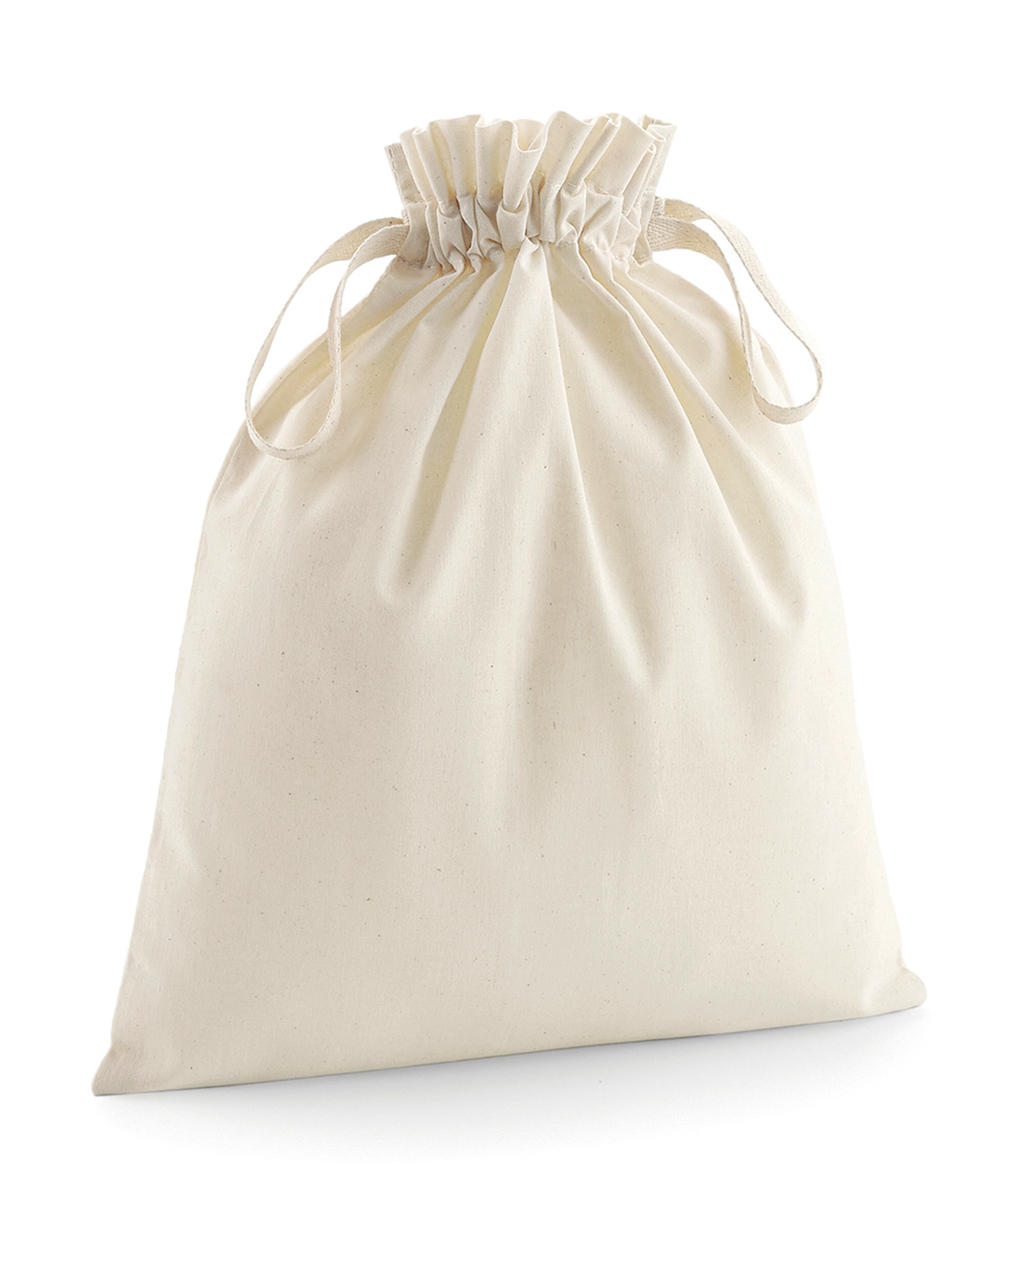  Organic Cotton Drawcord Bag in Farbe Natural